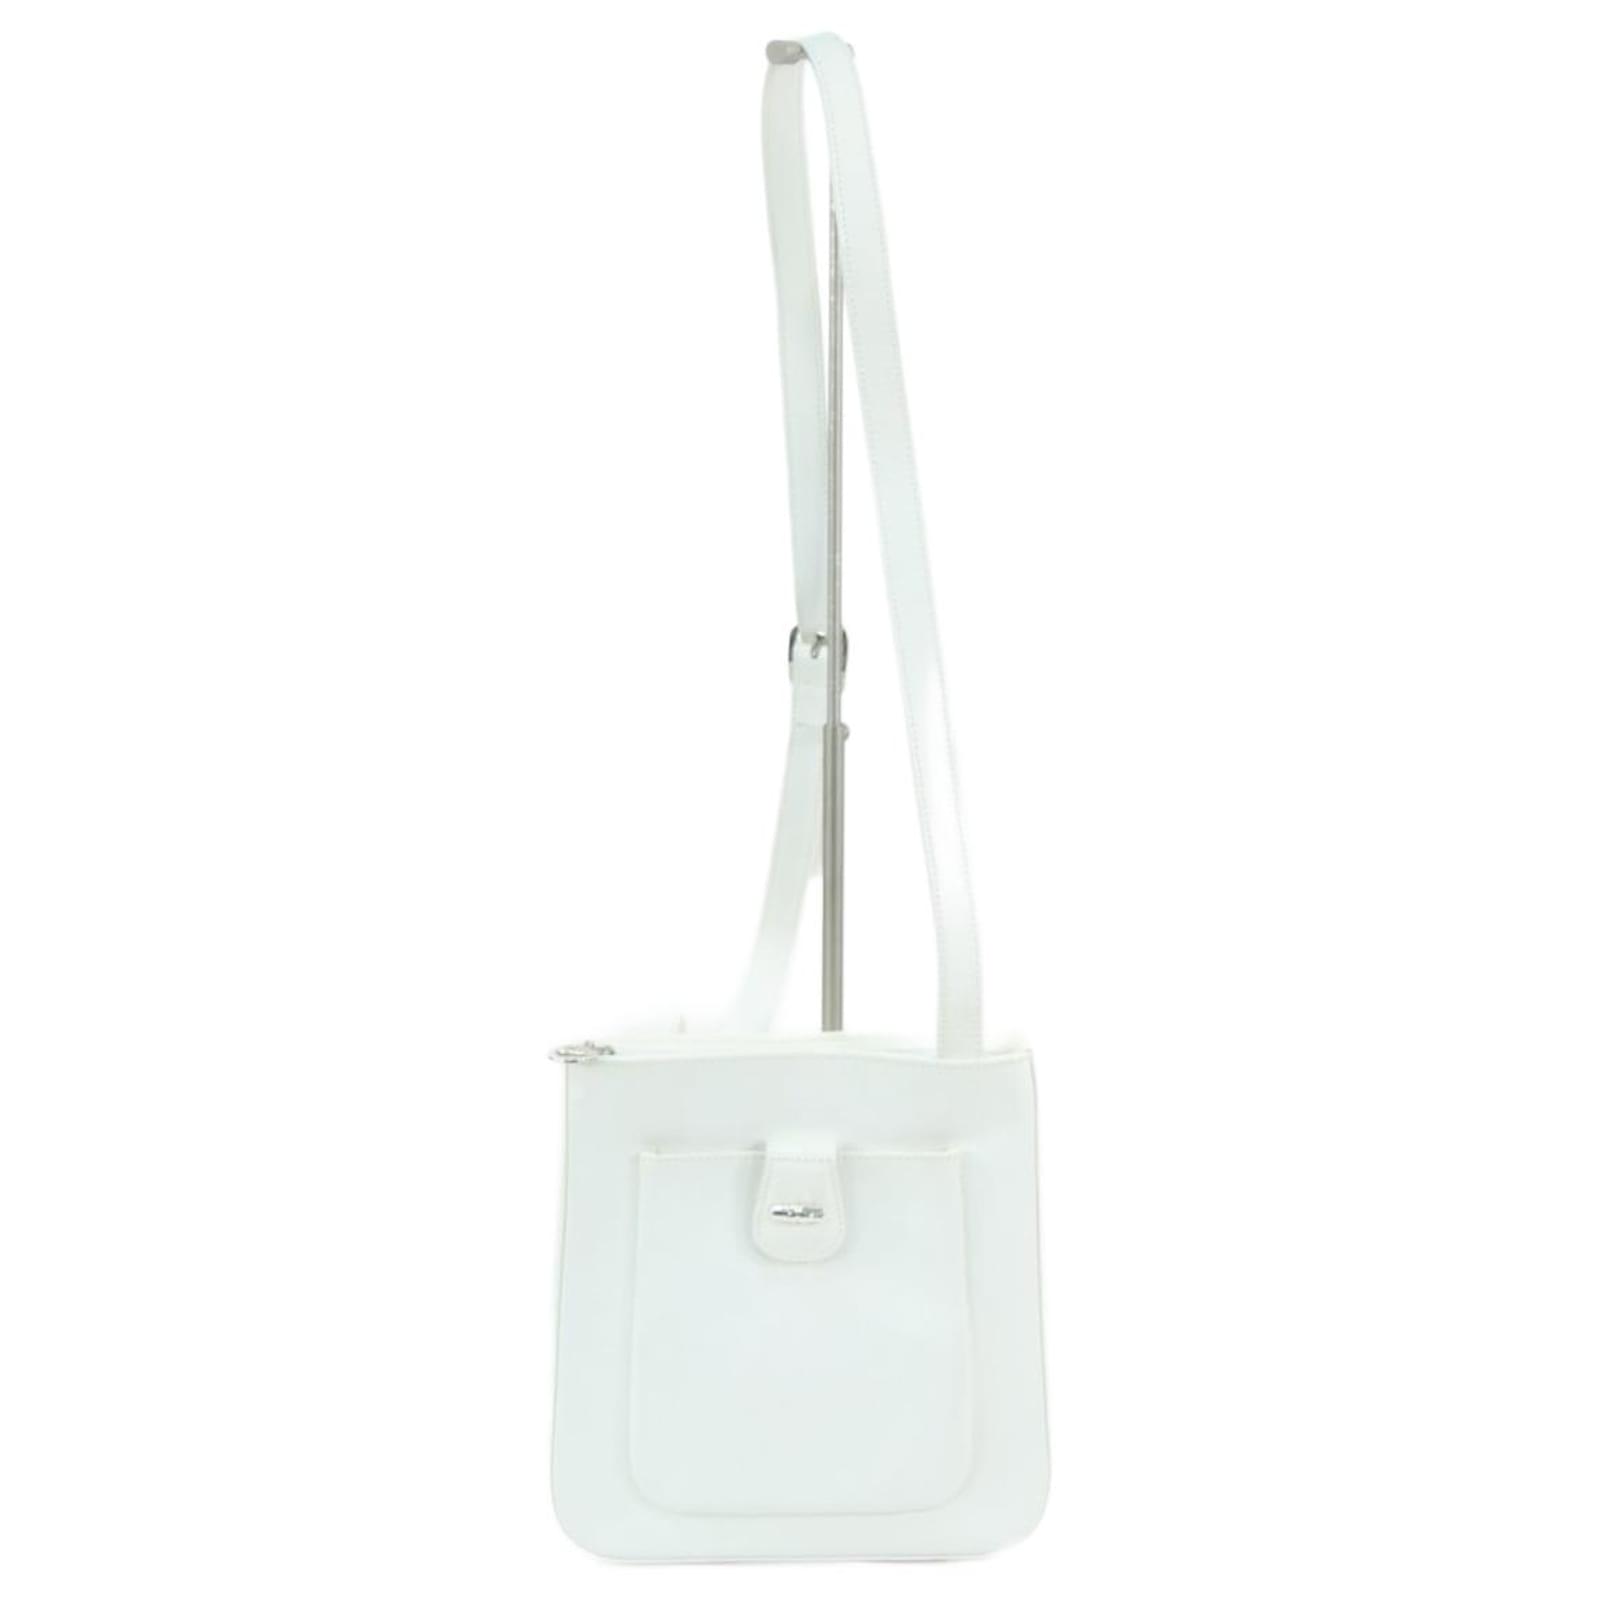 Longchamp Handbag Dimensions